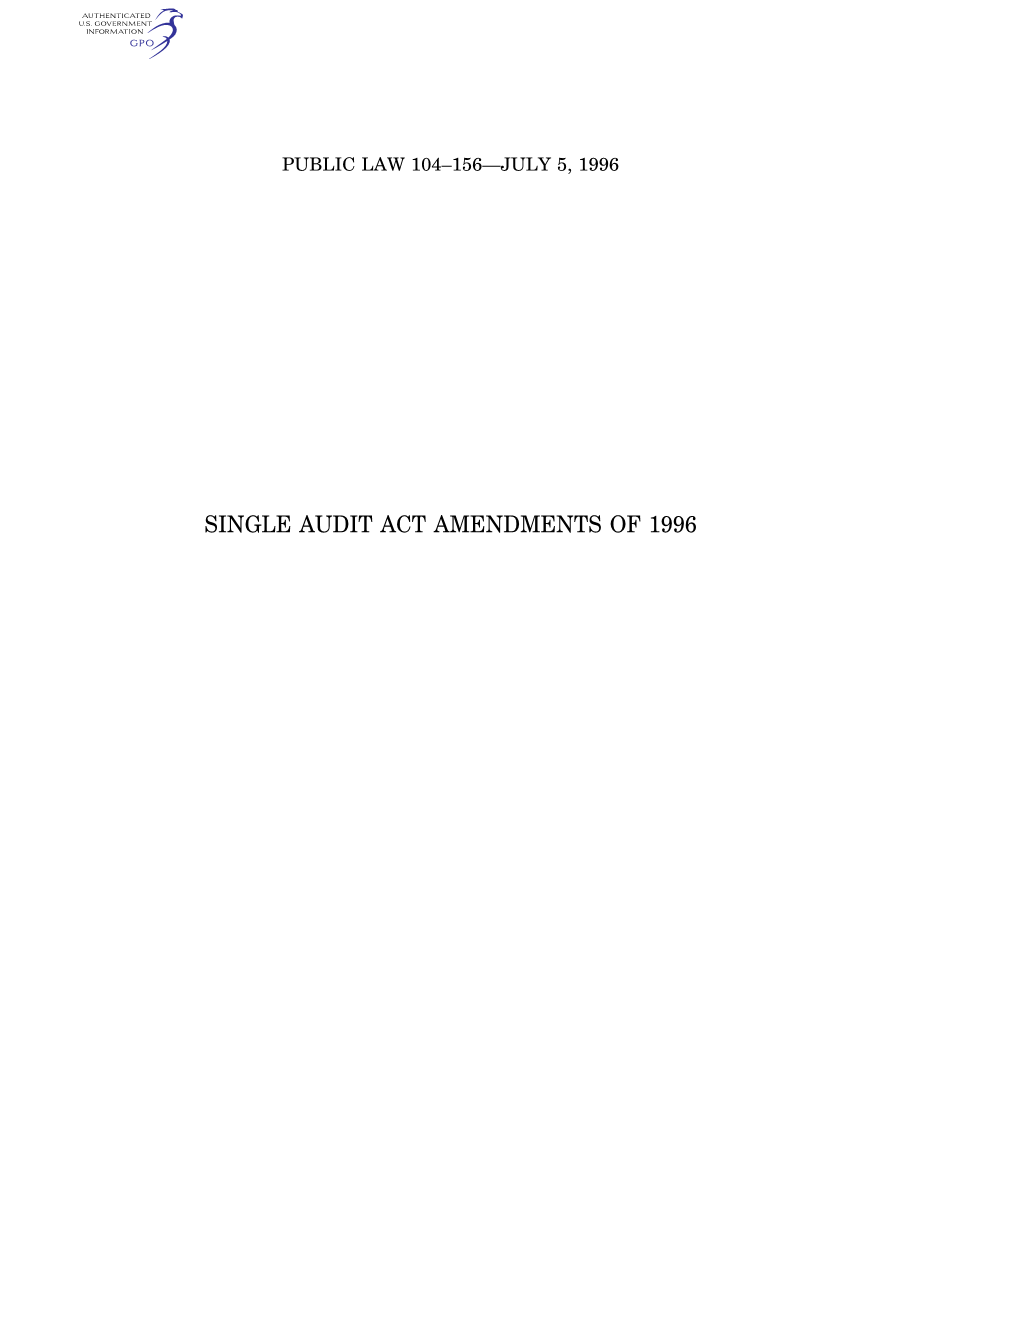 Single Audit Act Amendments of 1996 110 Stat